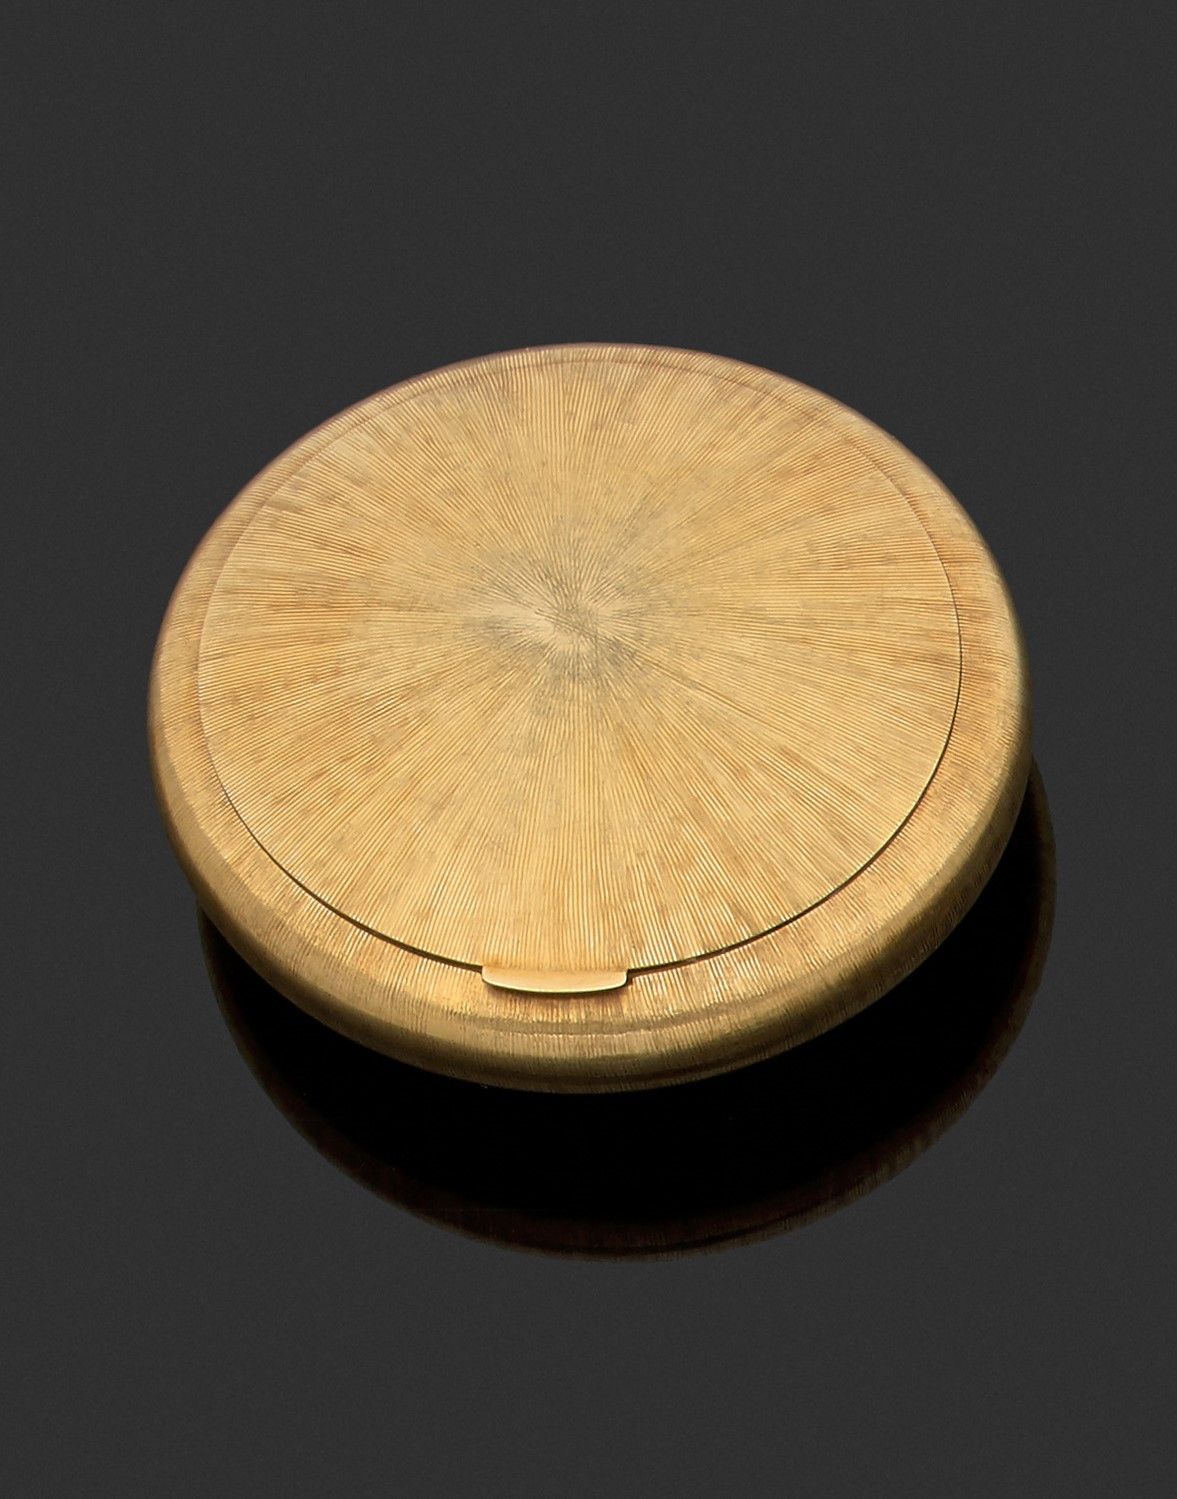 CHAUMET 18K（750）黄金圆形粉末表壳，带有放射状的扭索纹装饰。

签名：Chaumet Paris，编号：3205。

由珠宝商打上印记

直径约6&hellip;